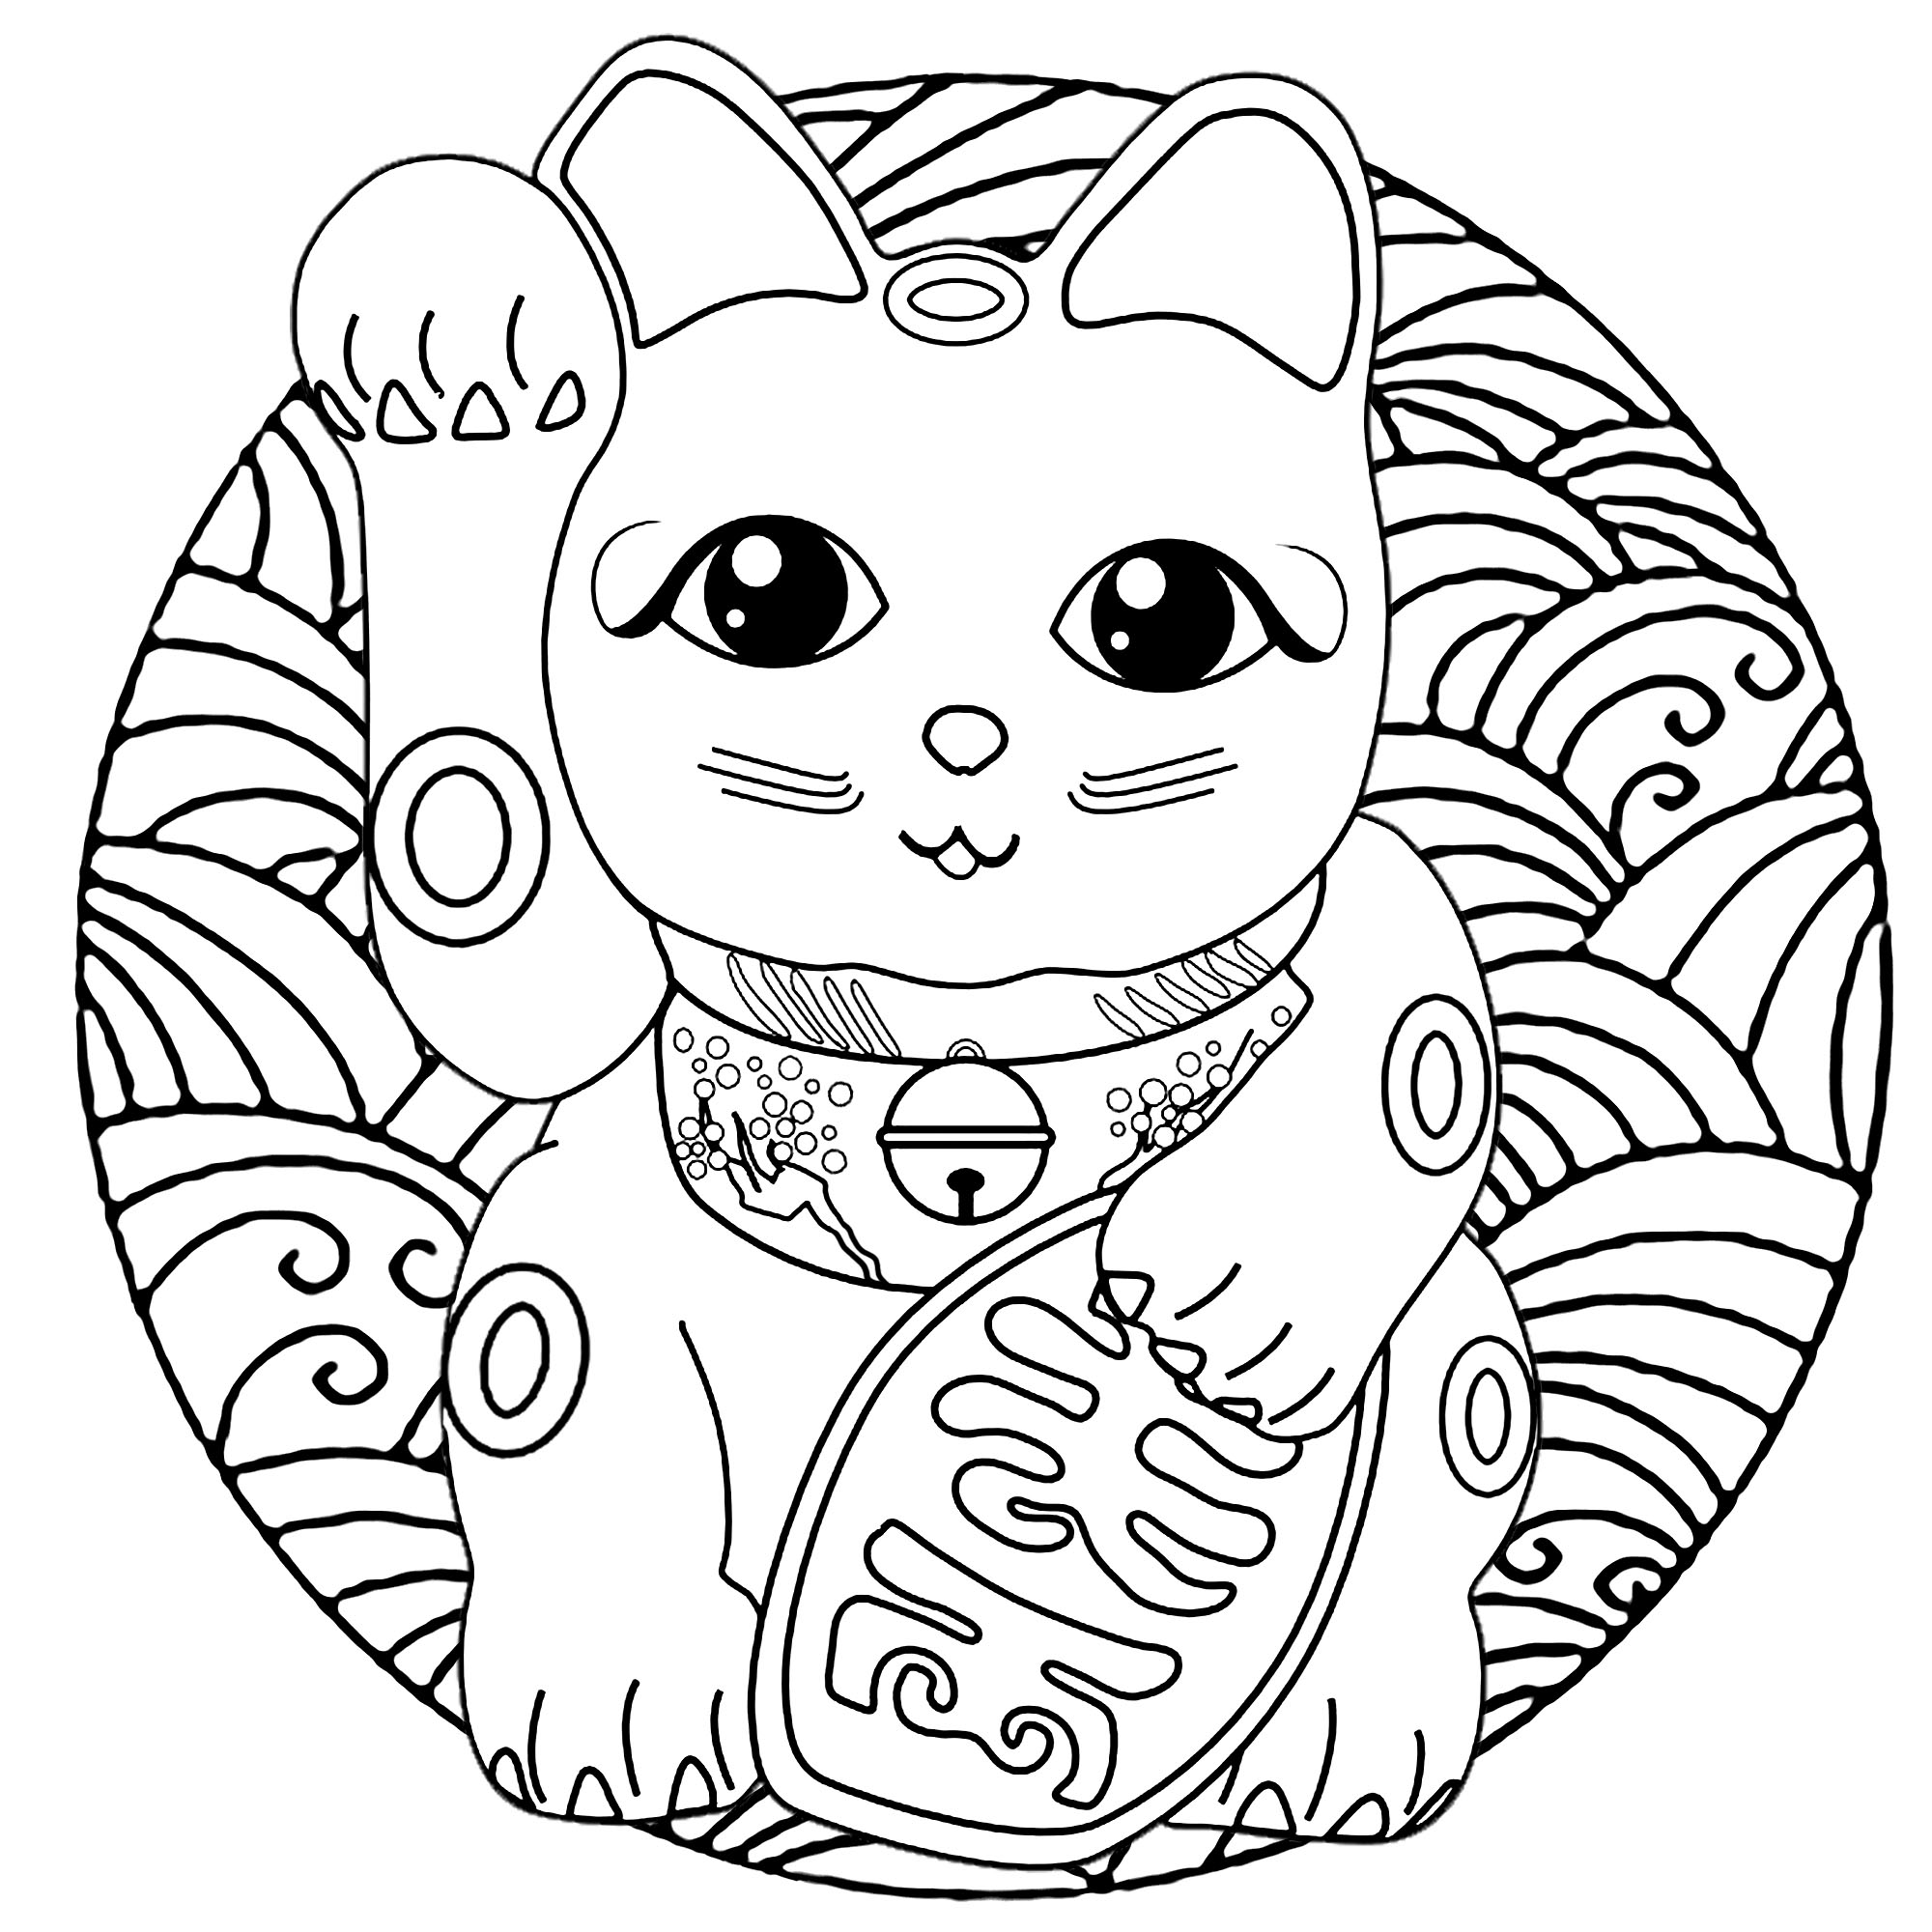 A cute Maneki Neko cat (Japanese figurine : lucky charm, talisman) in a Mandala full of waves (Japanese graphic design style), Artist : Art. Isabelle